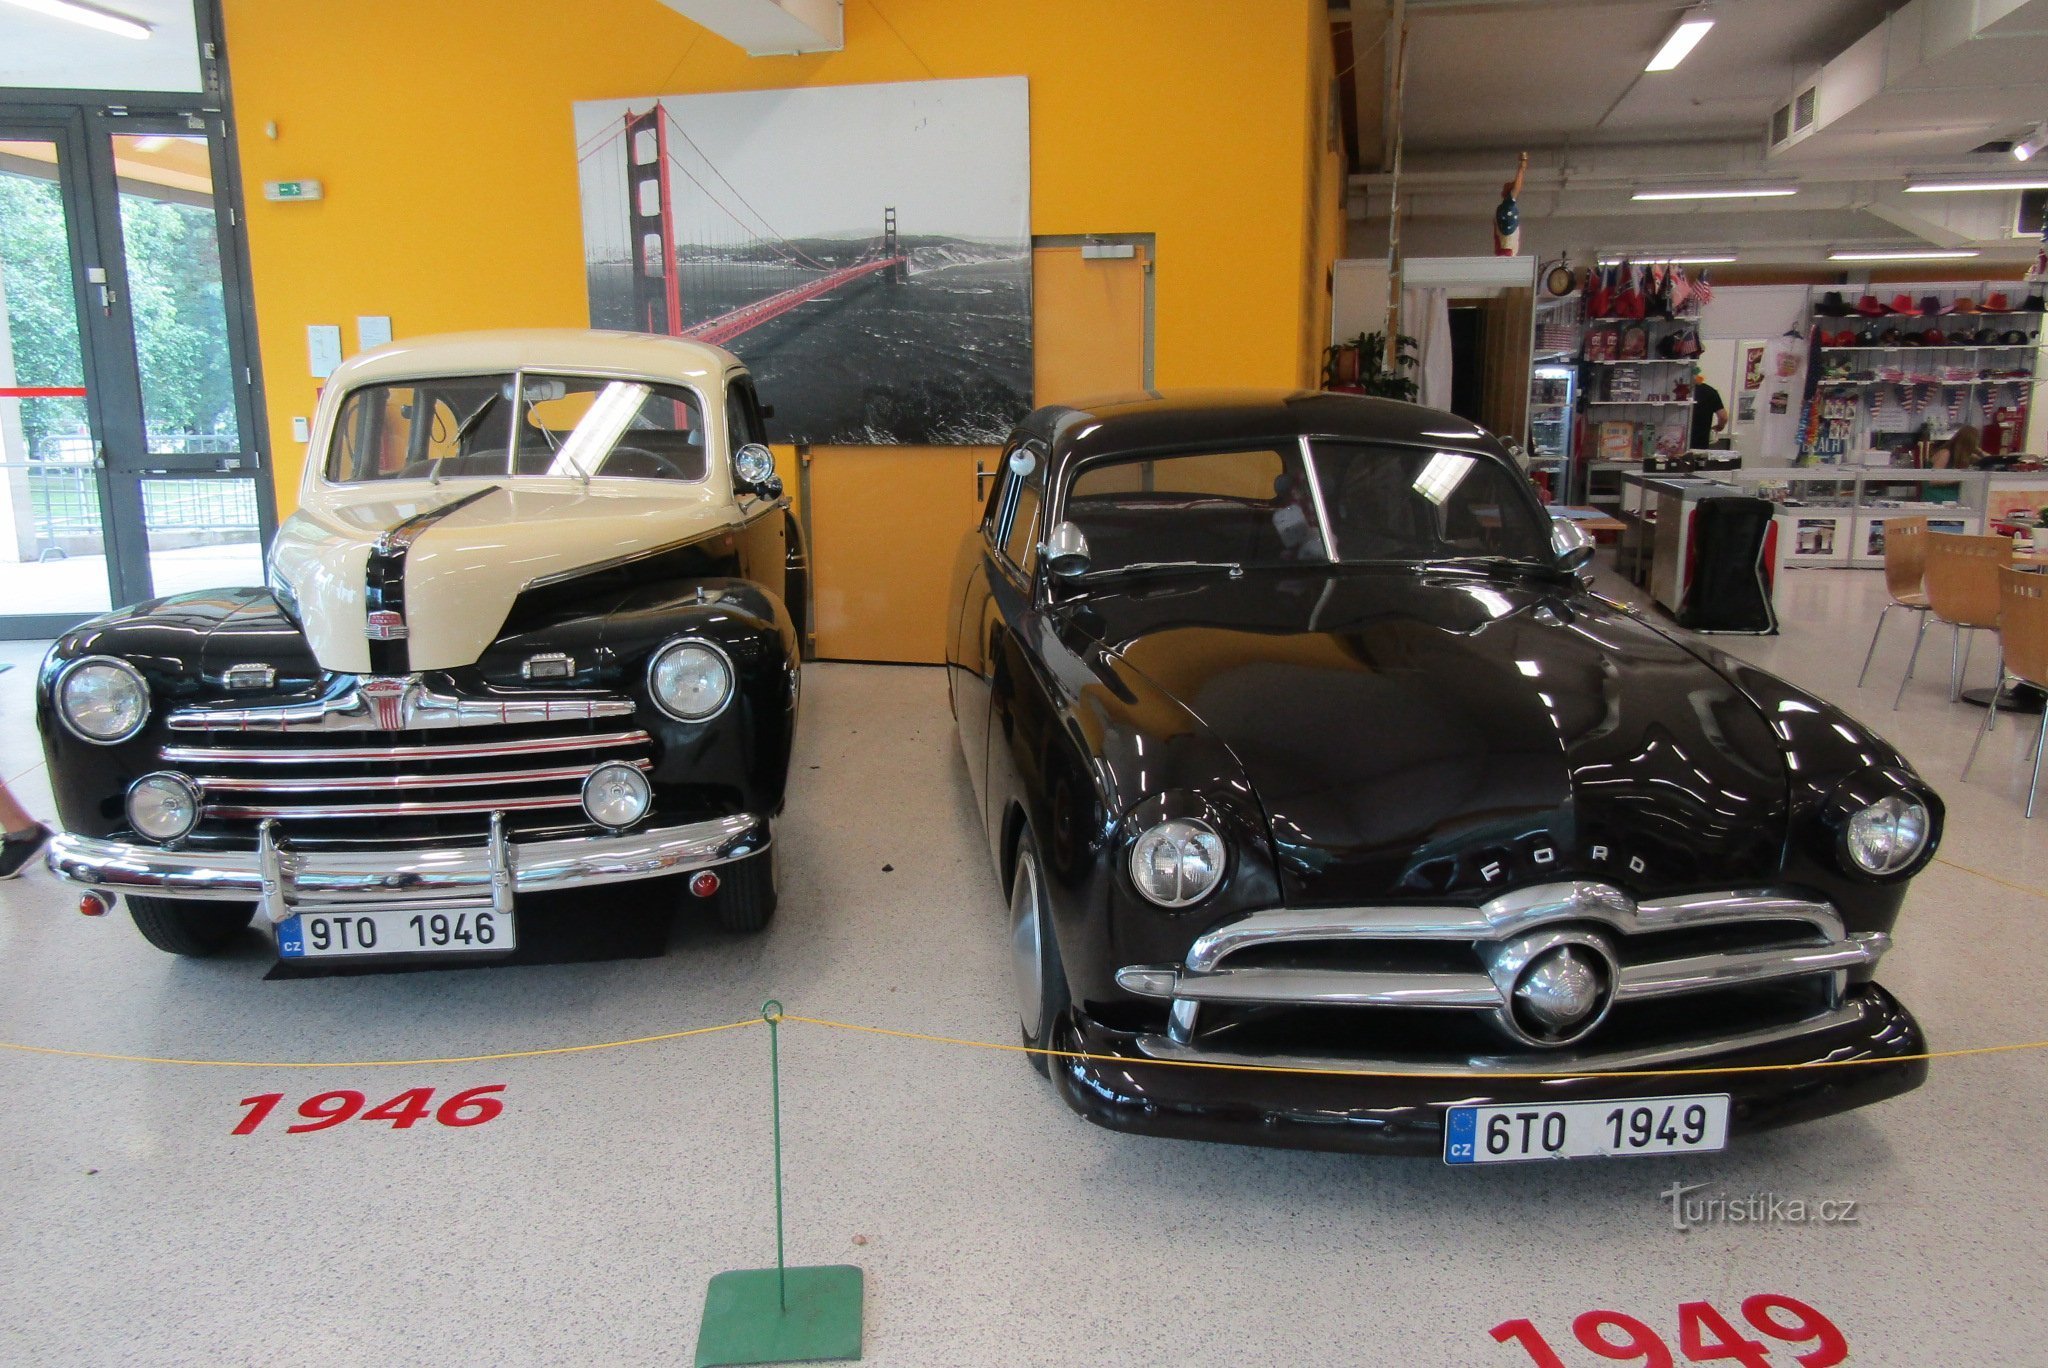 American Classic Cars, centro de exposições Černá Louka, Ostrava